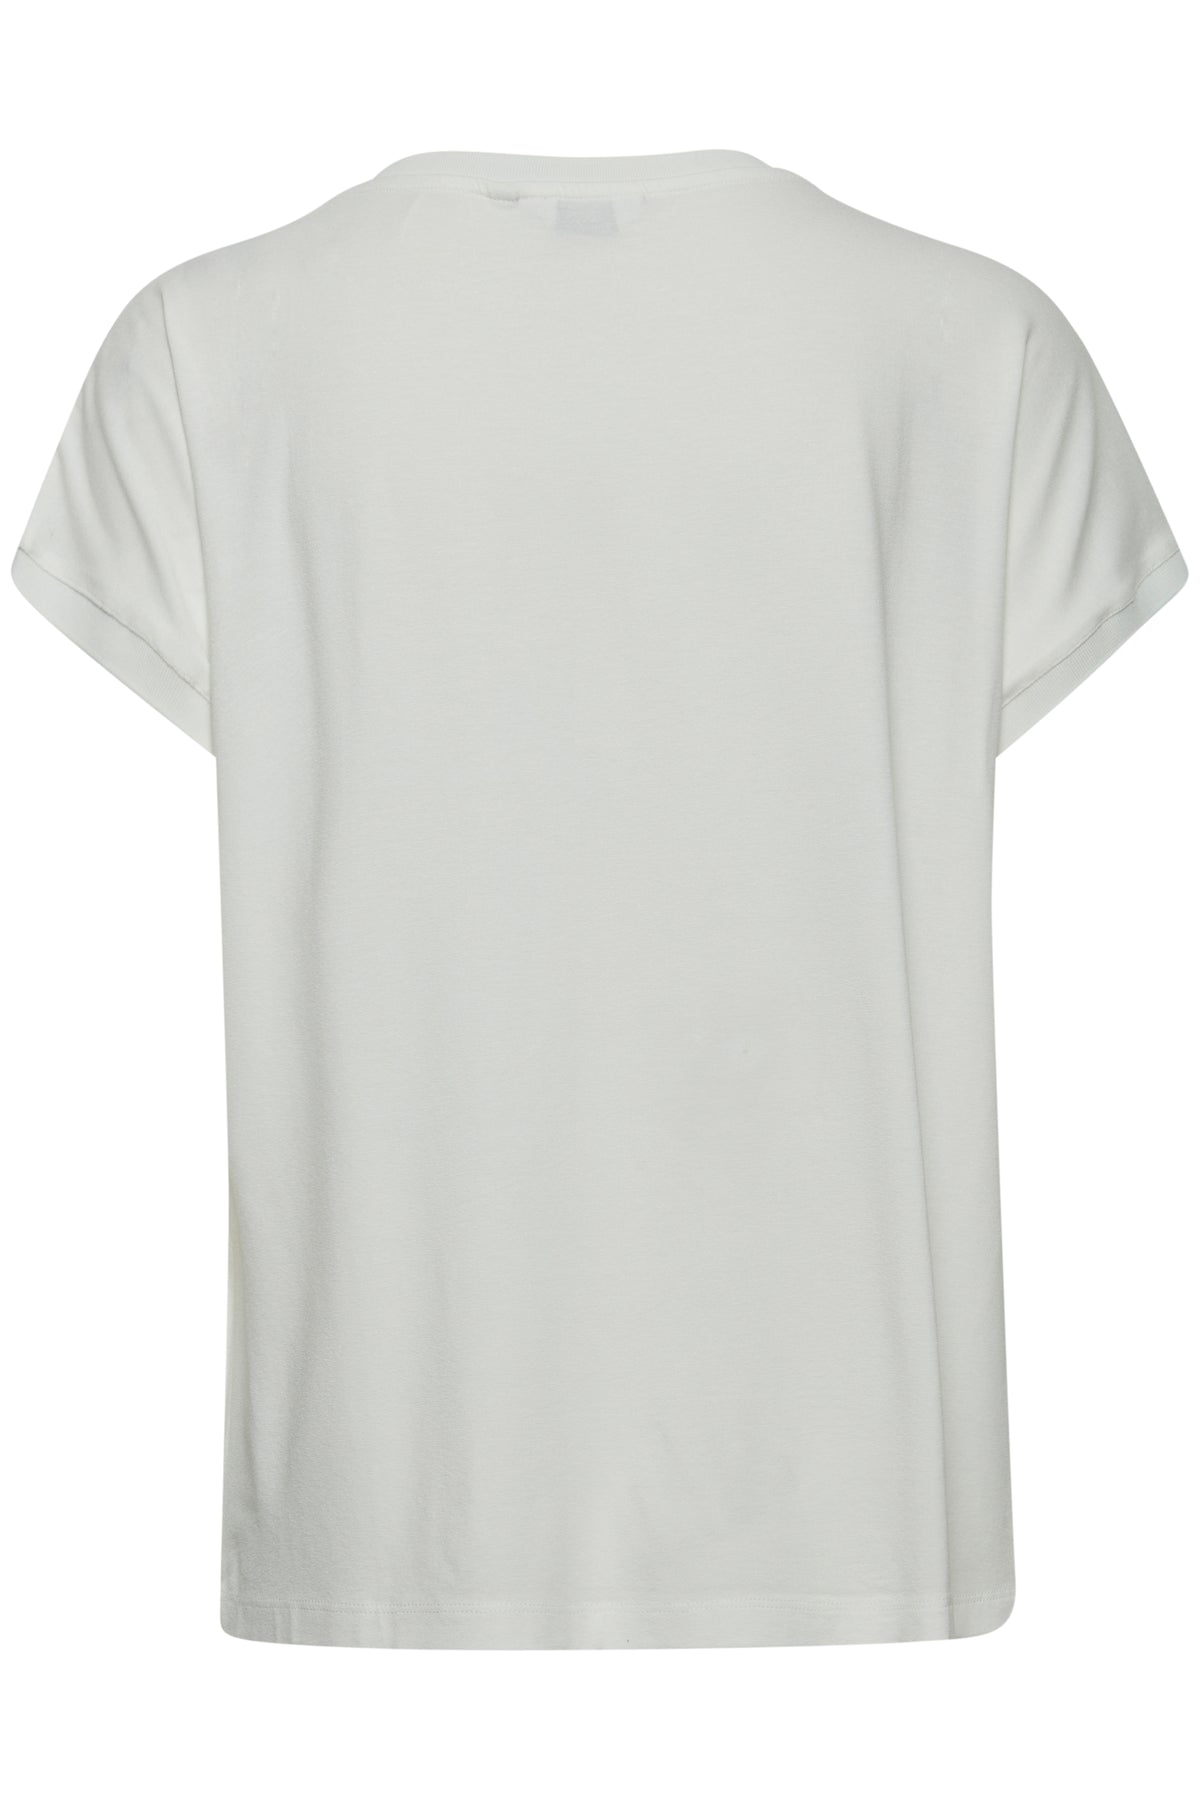 B.Young ByPanyax Off White T-Shirt, 20814435